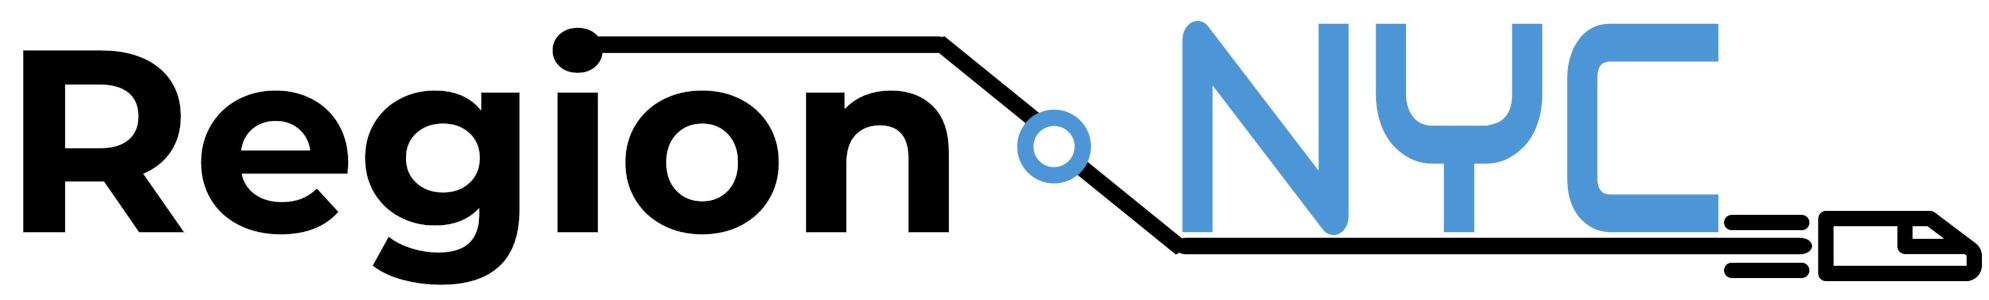 Region NYC - site logo